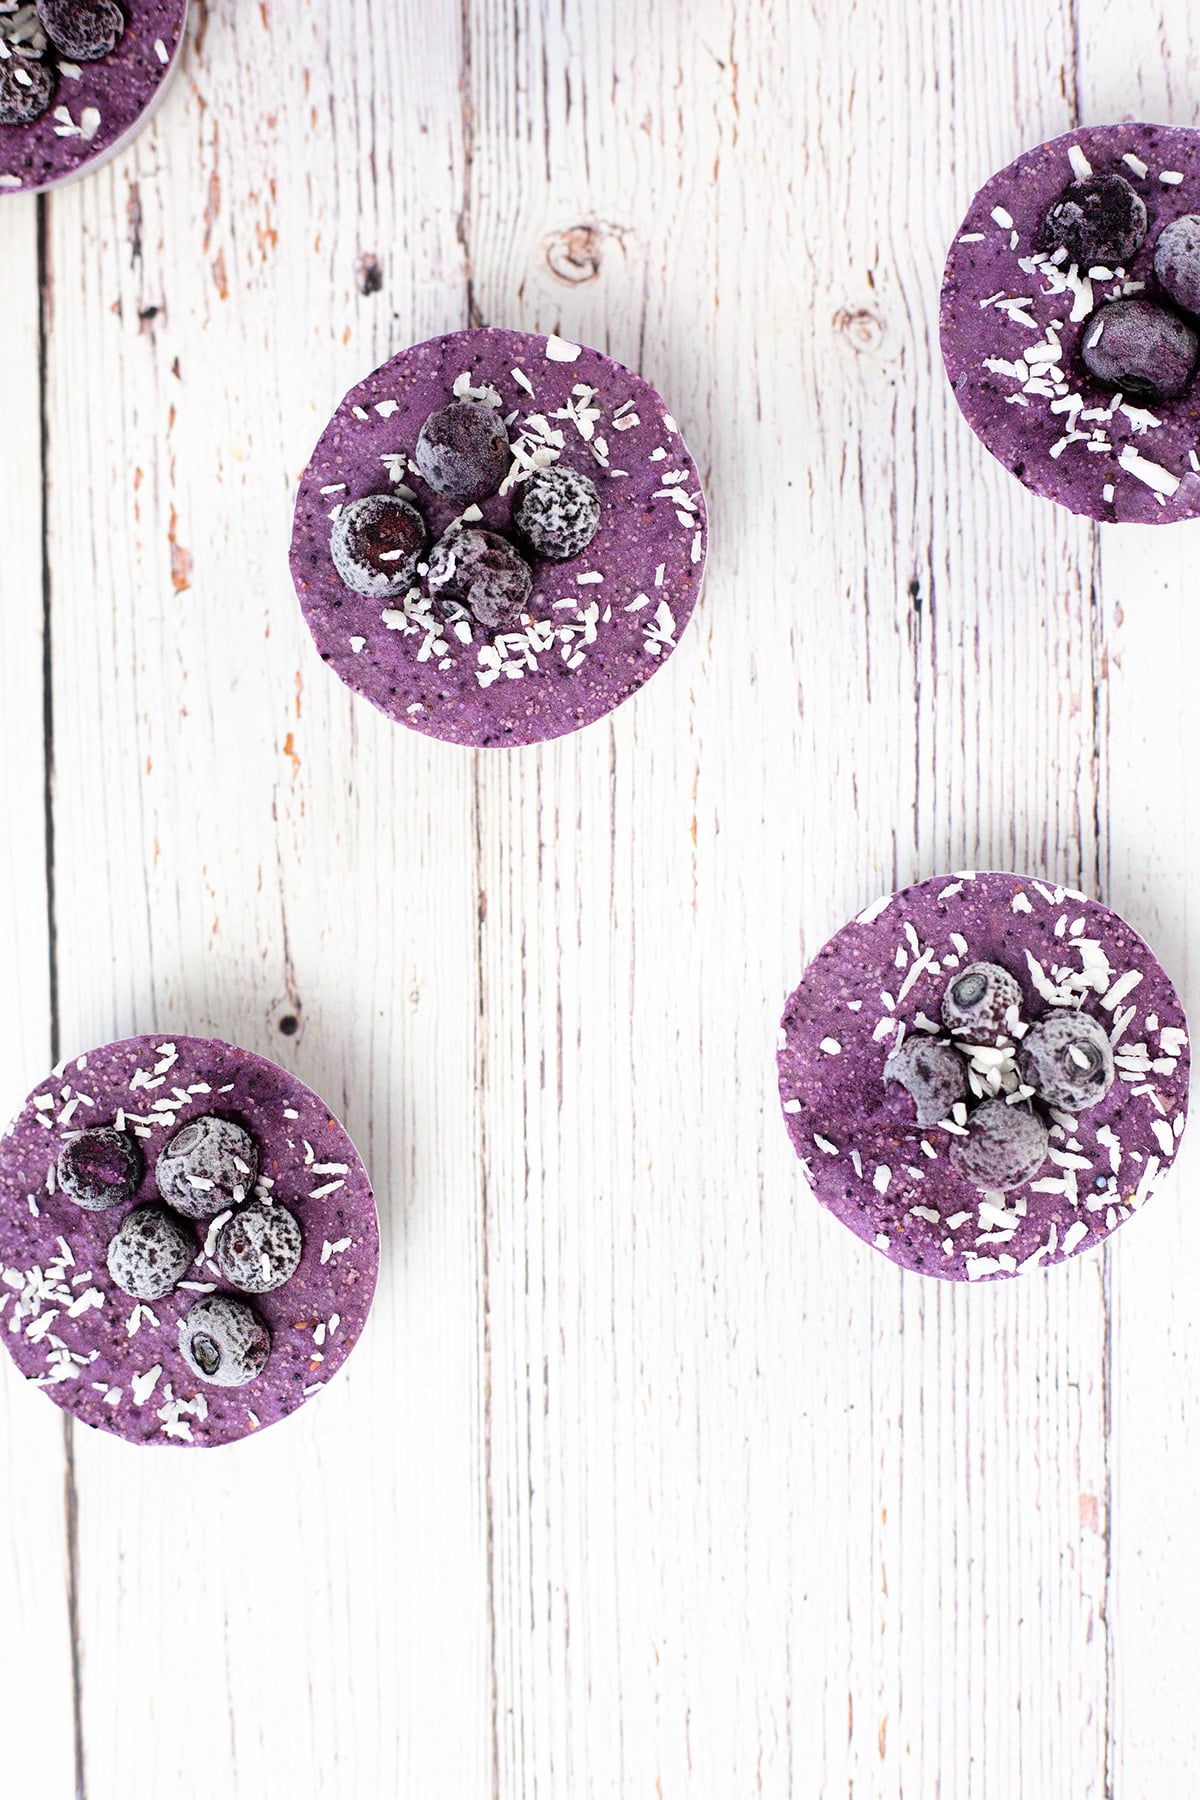 Birdseye view of blueberry Vegan cheesecakes on wooden white background.